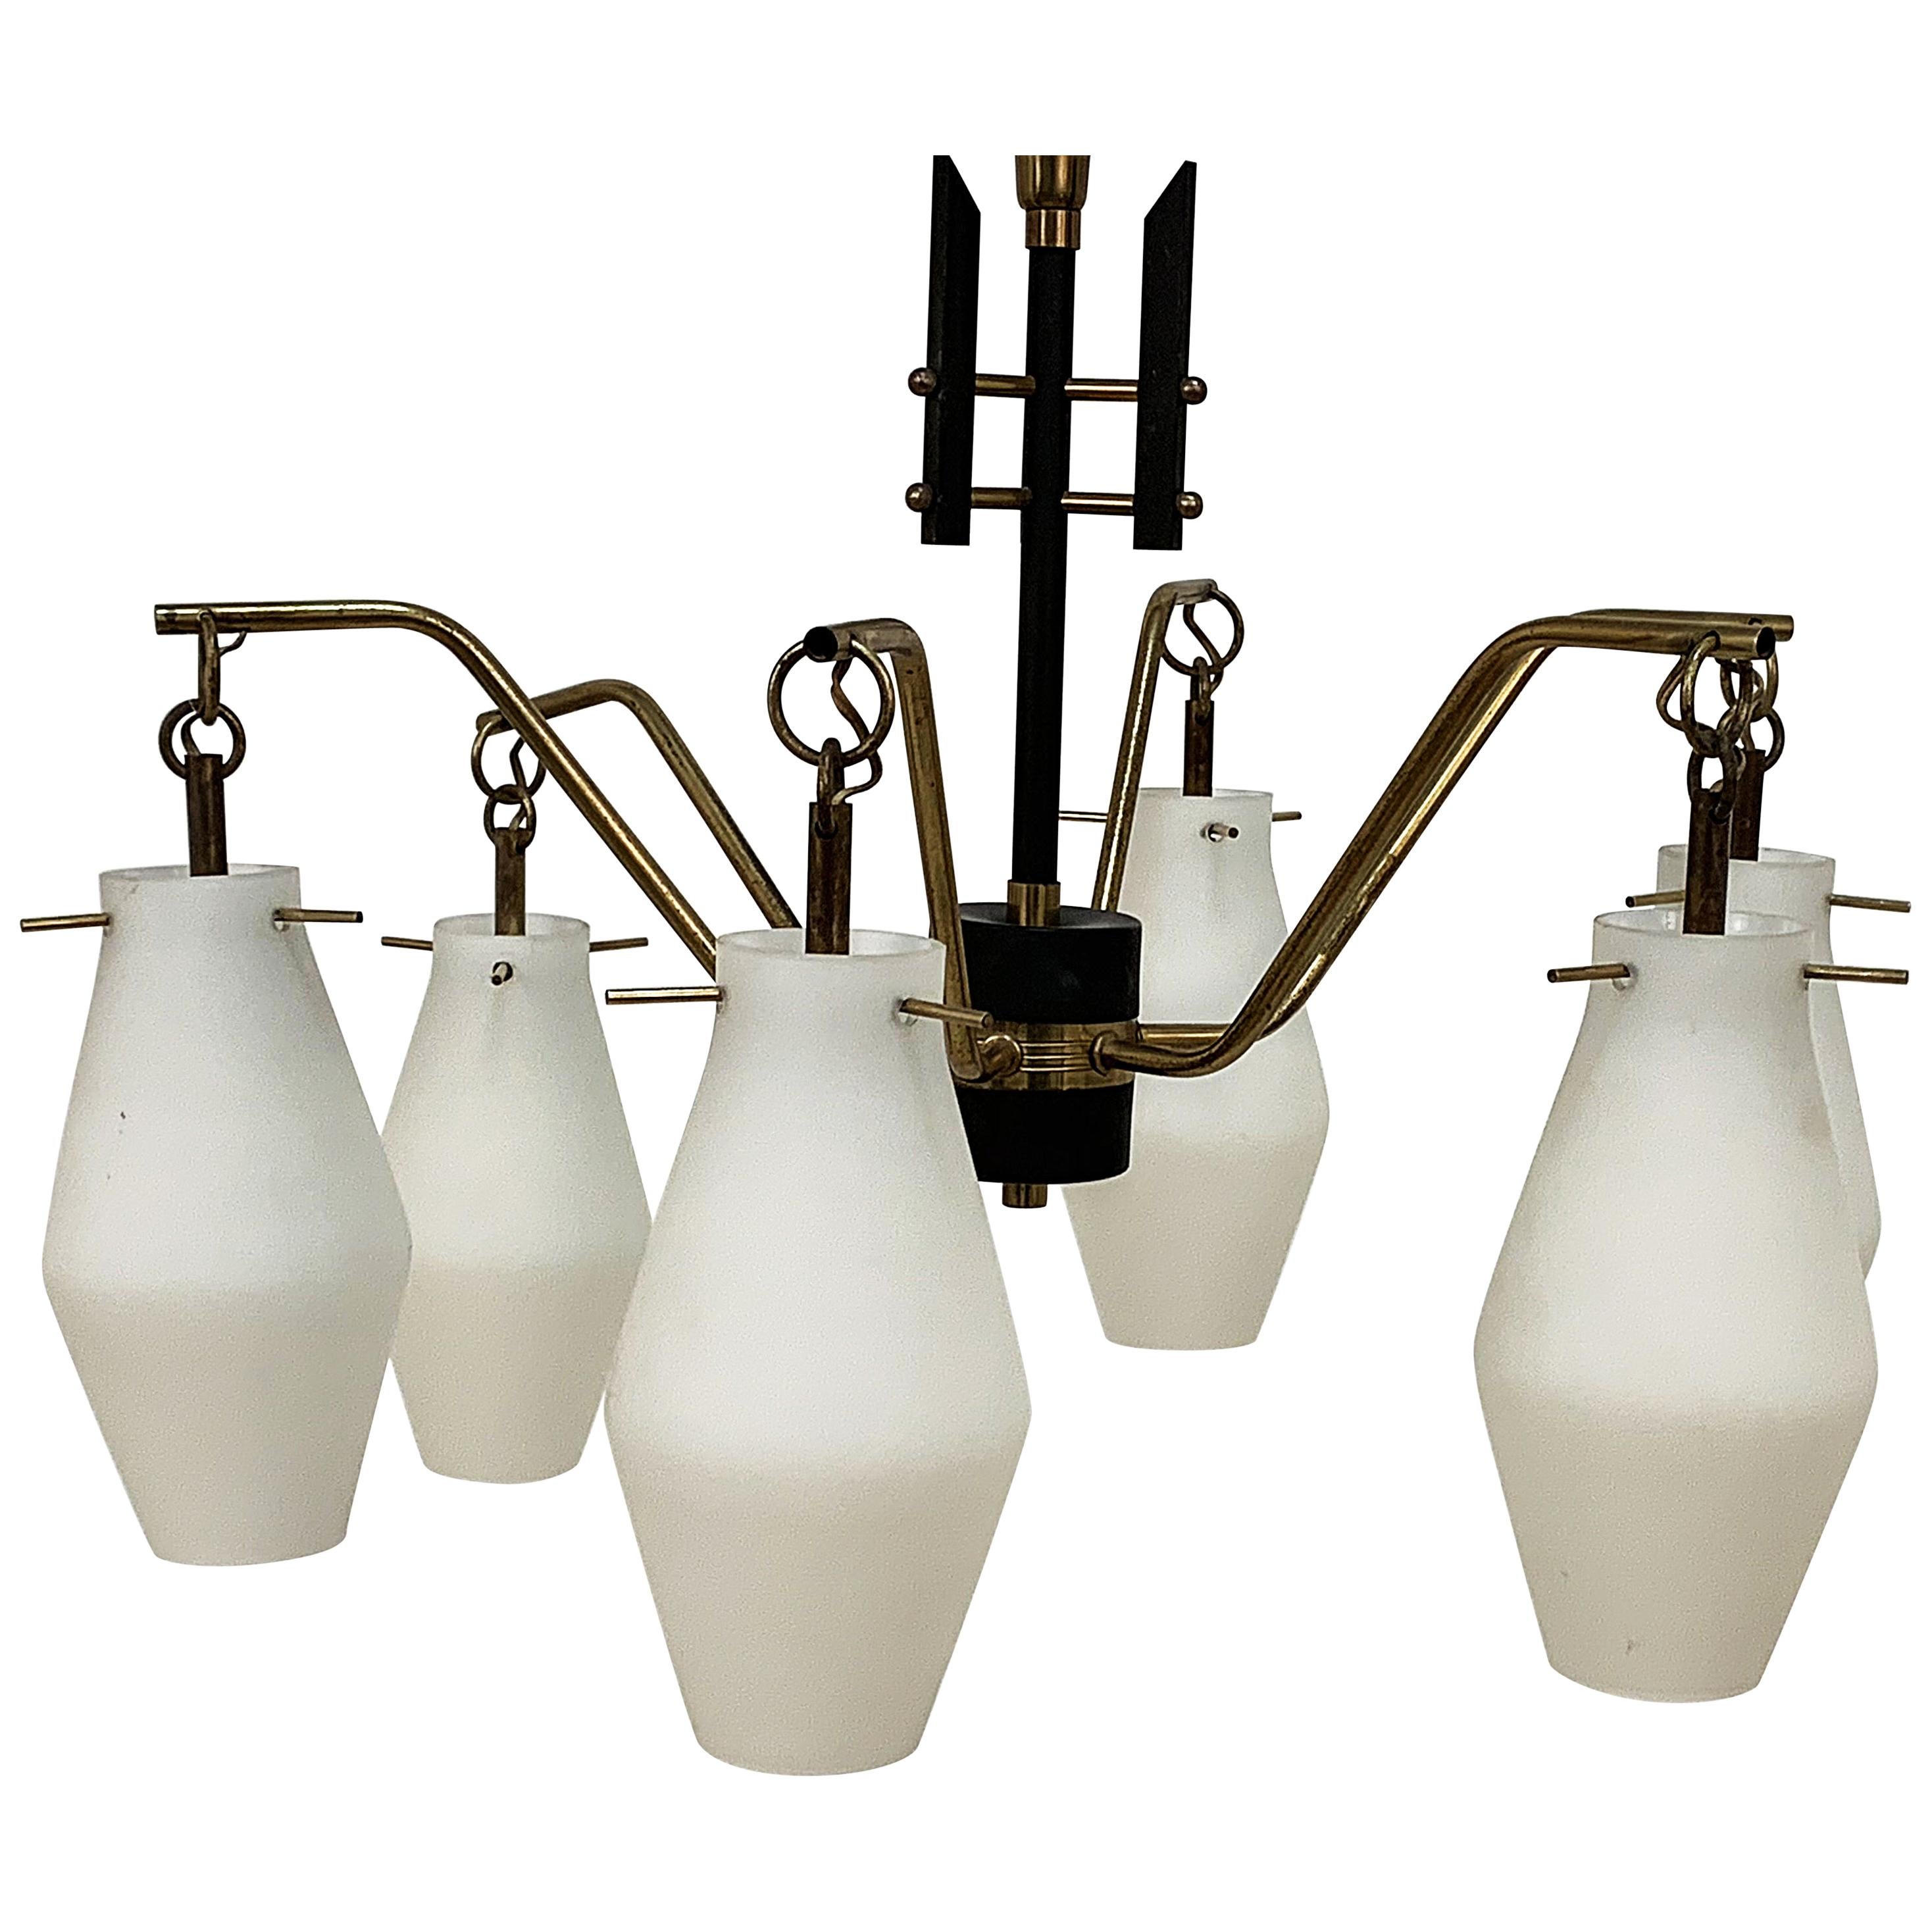 Italian Chandelier, Opaline Glass, Brass, 6 Lighting Arms, attrib to Stilnovo